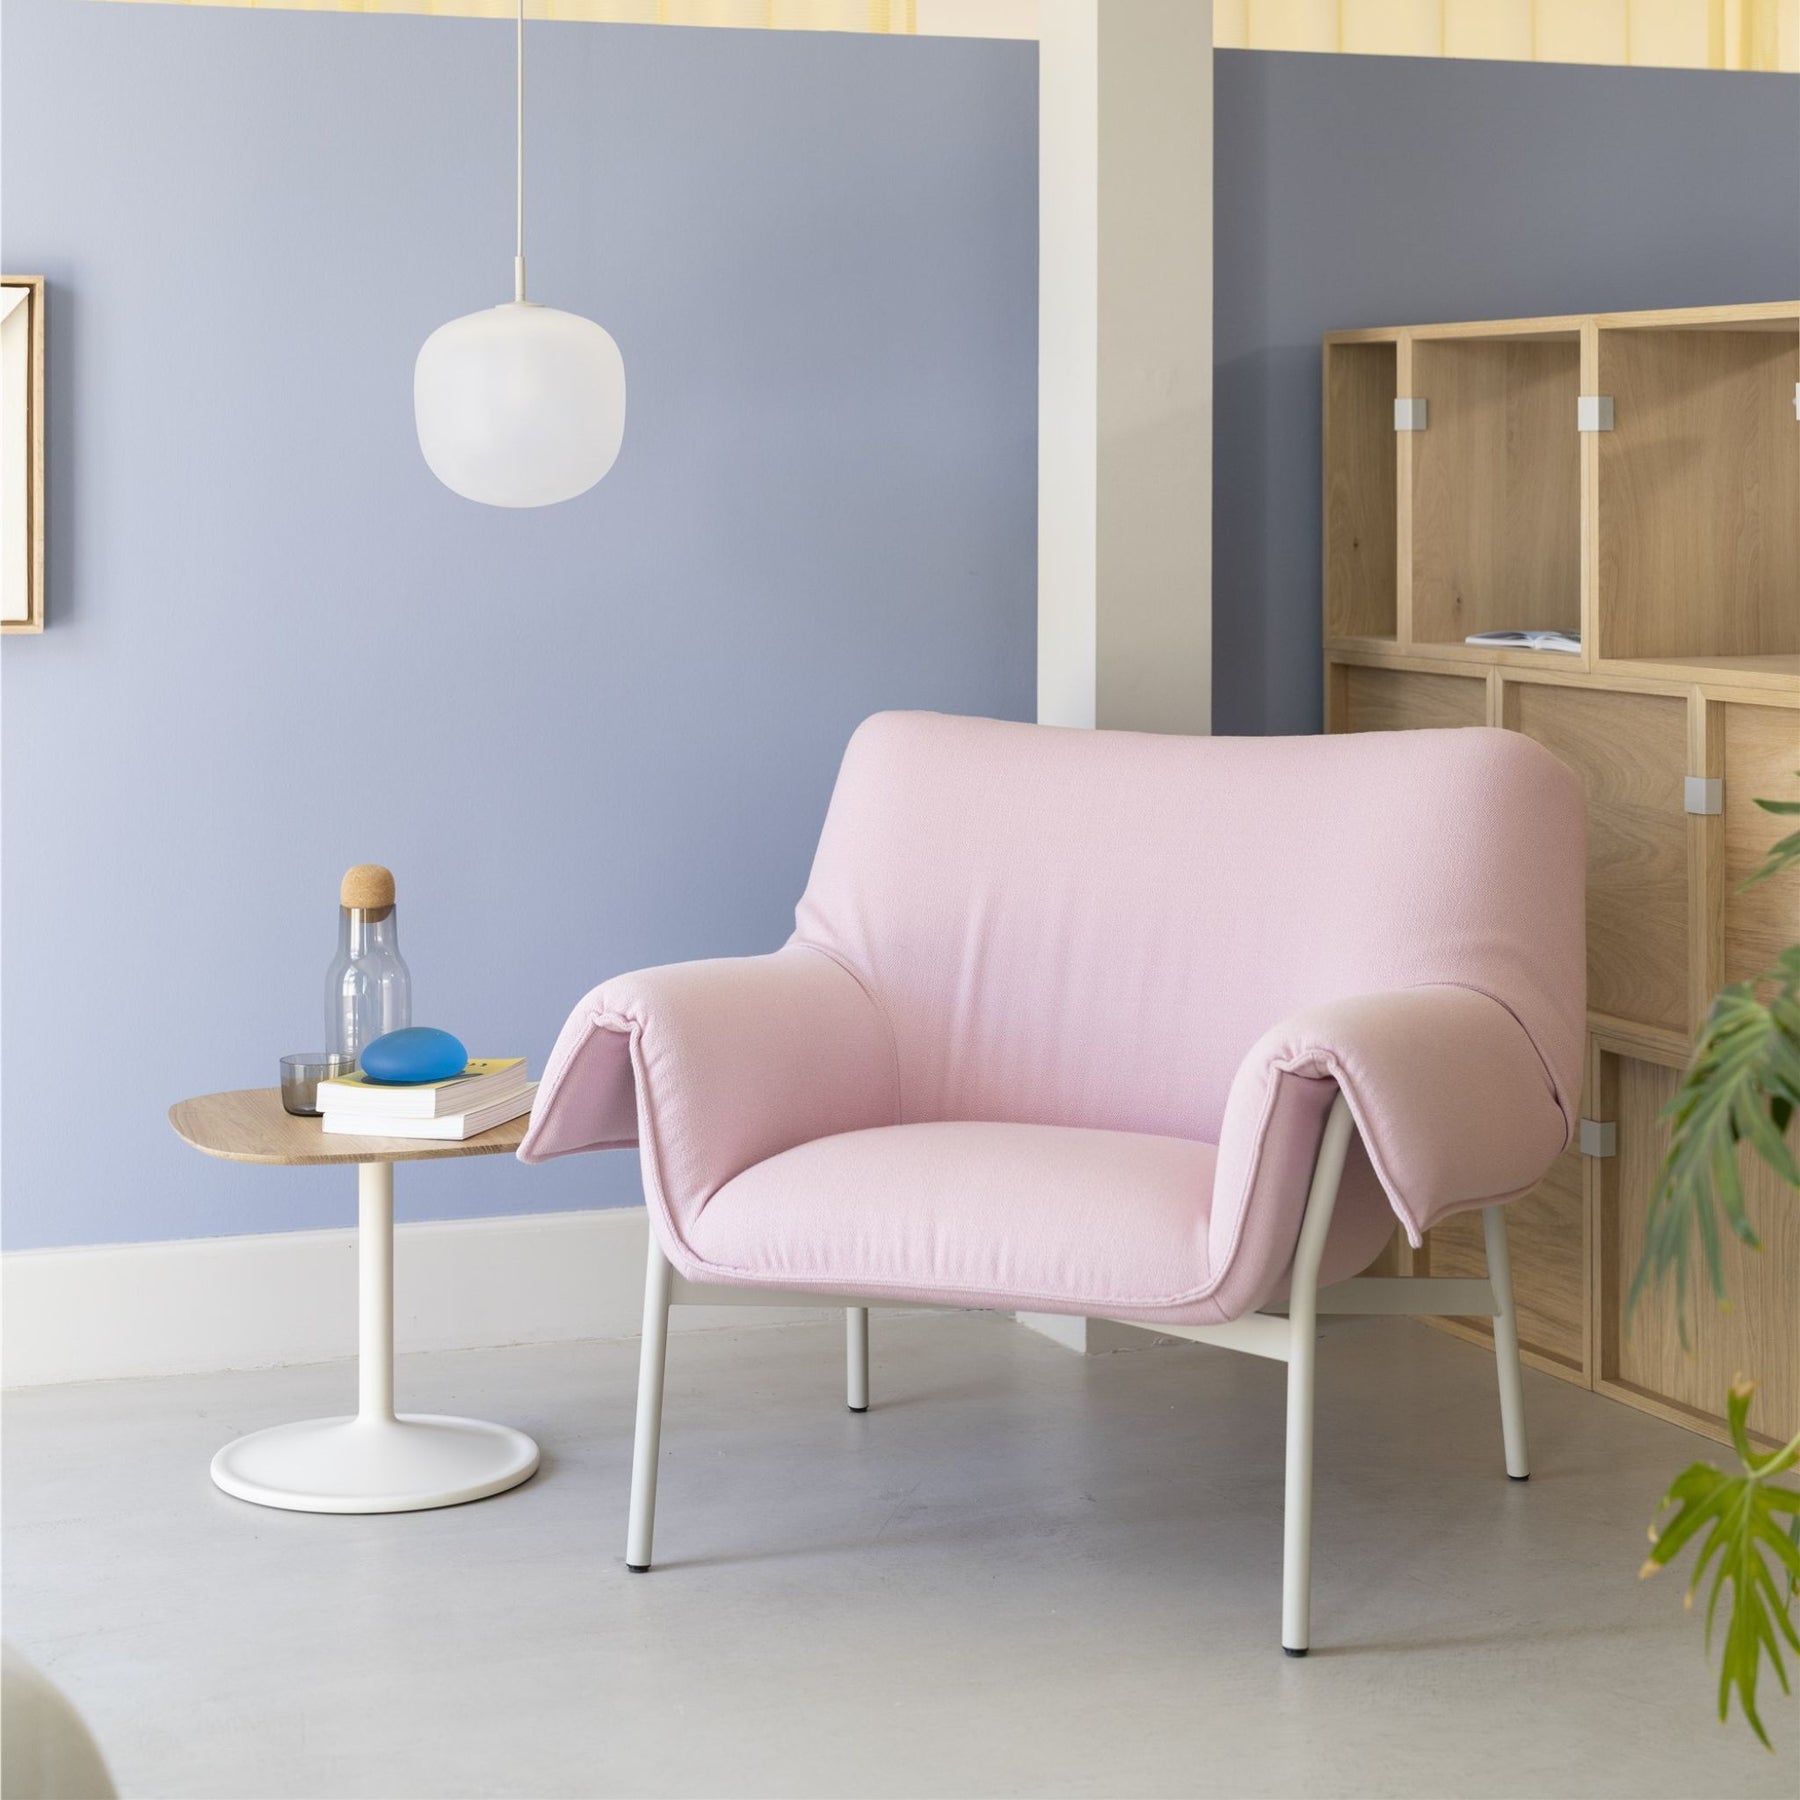 Muuto Wrap Lounge Chair Pink in Copenhagen Showroom with Rime Pendant Light